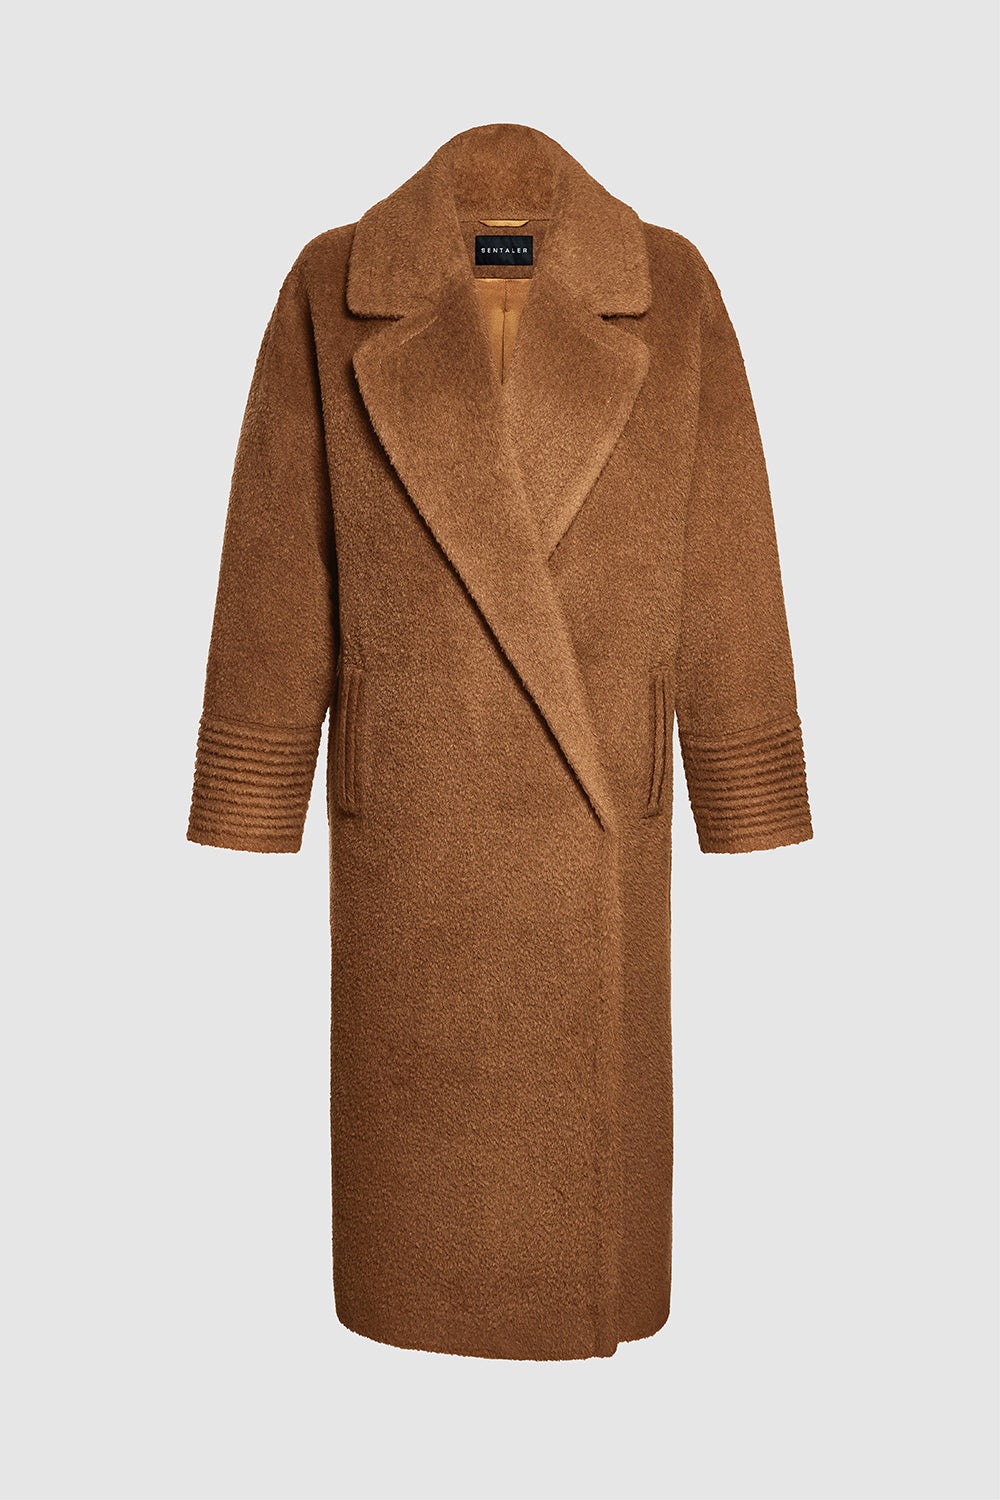 Sentaler Long Oversized Alpaca & Wool-Blend Coat